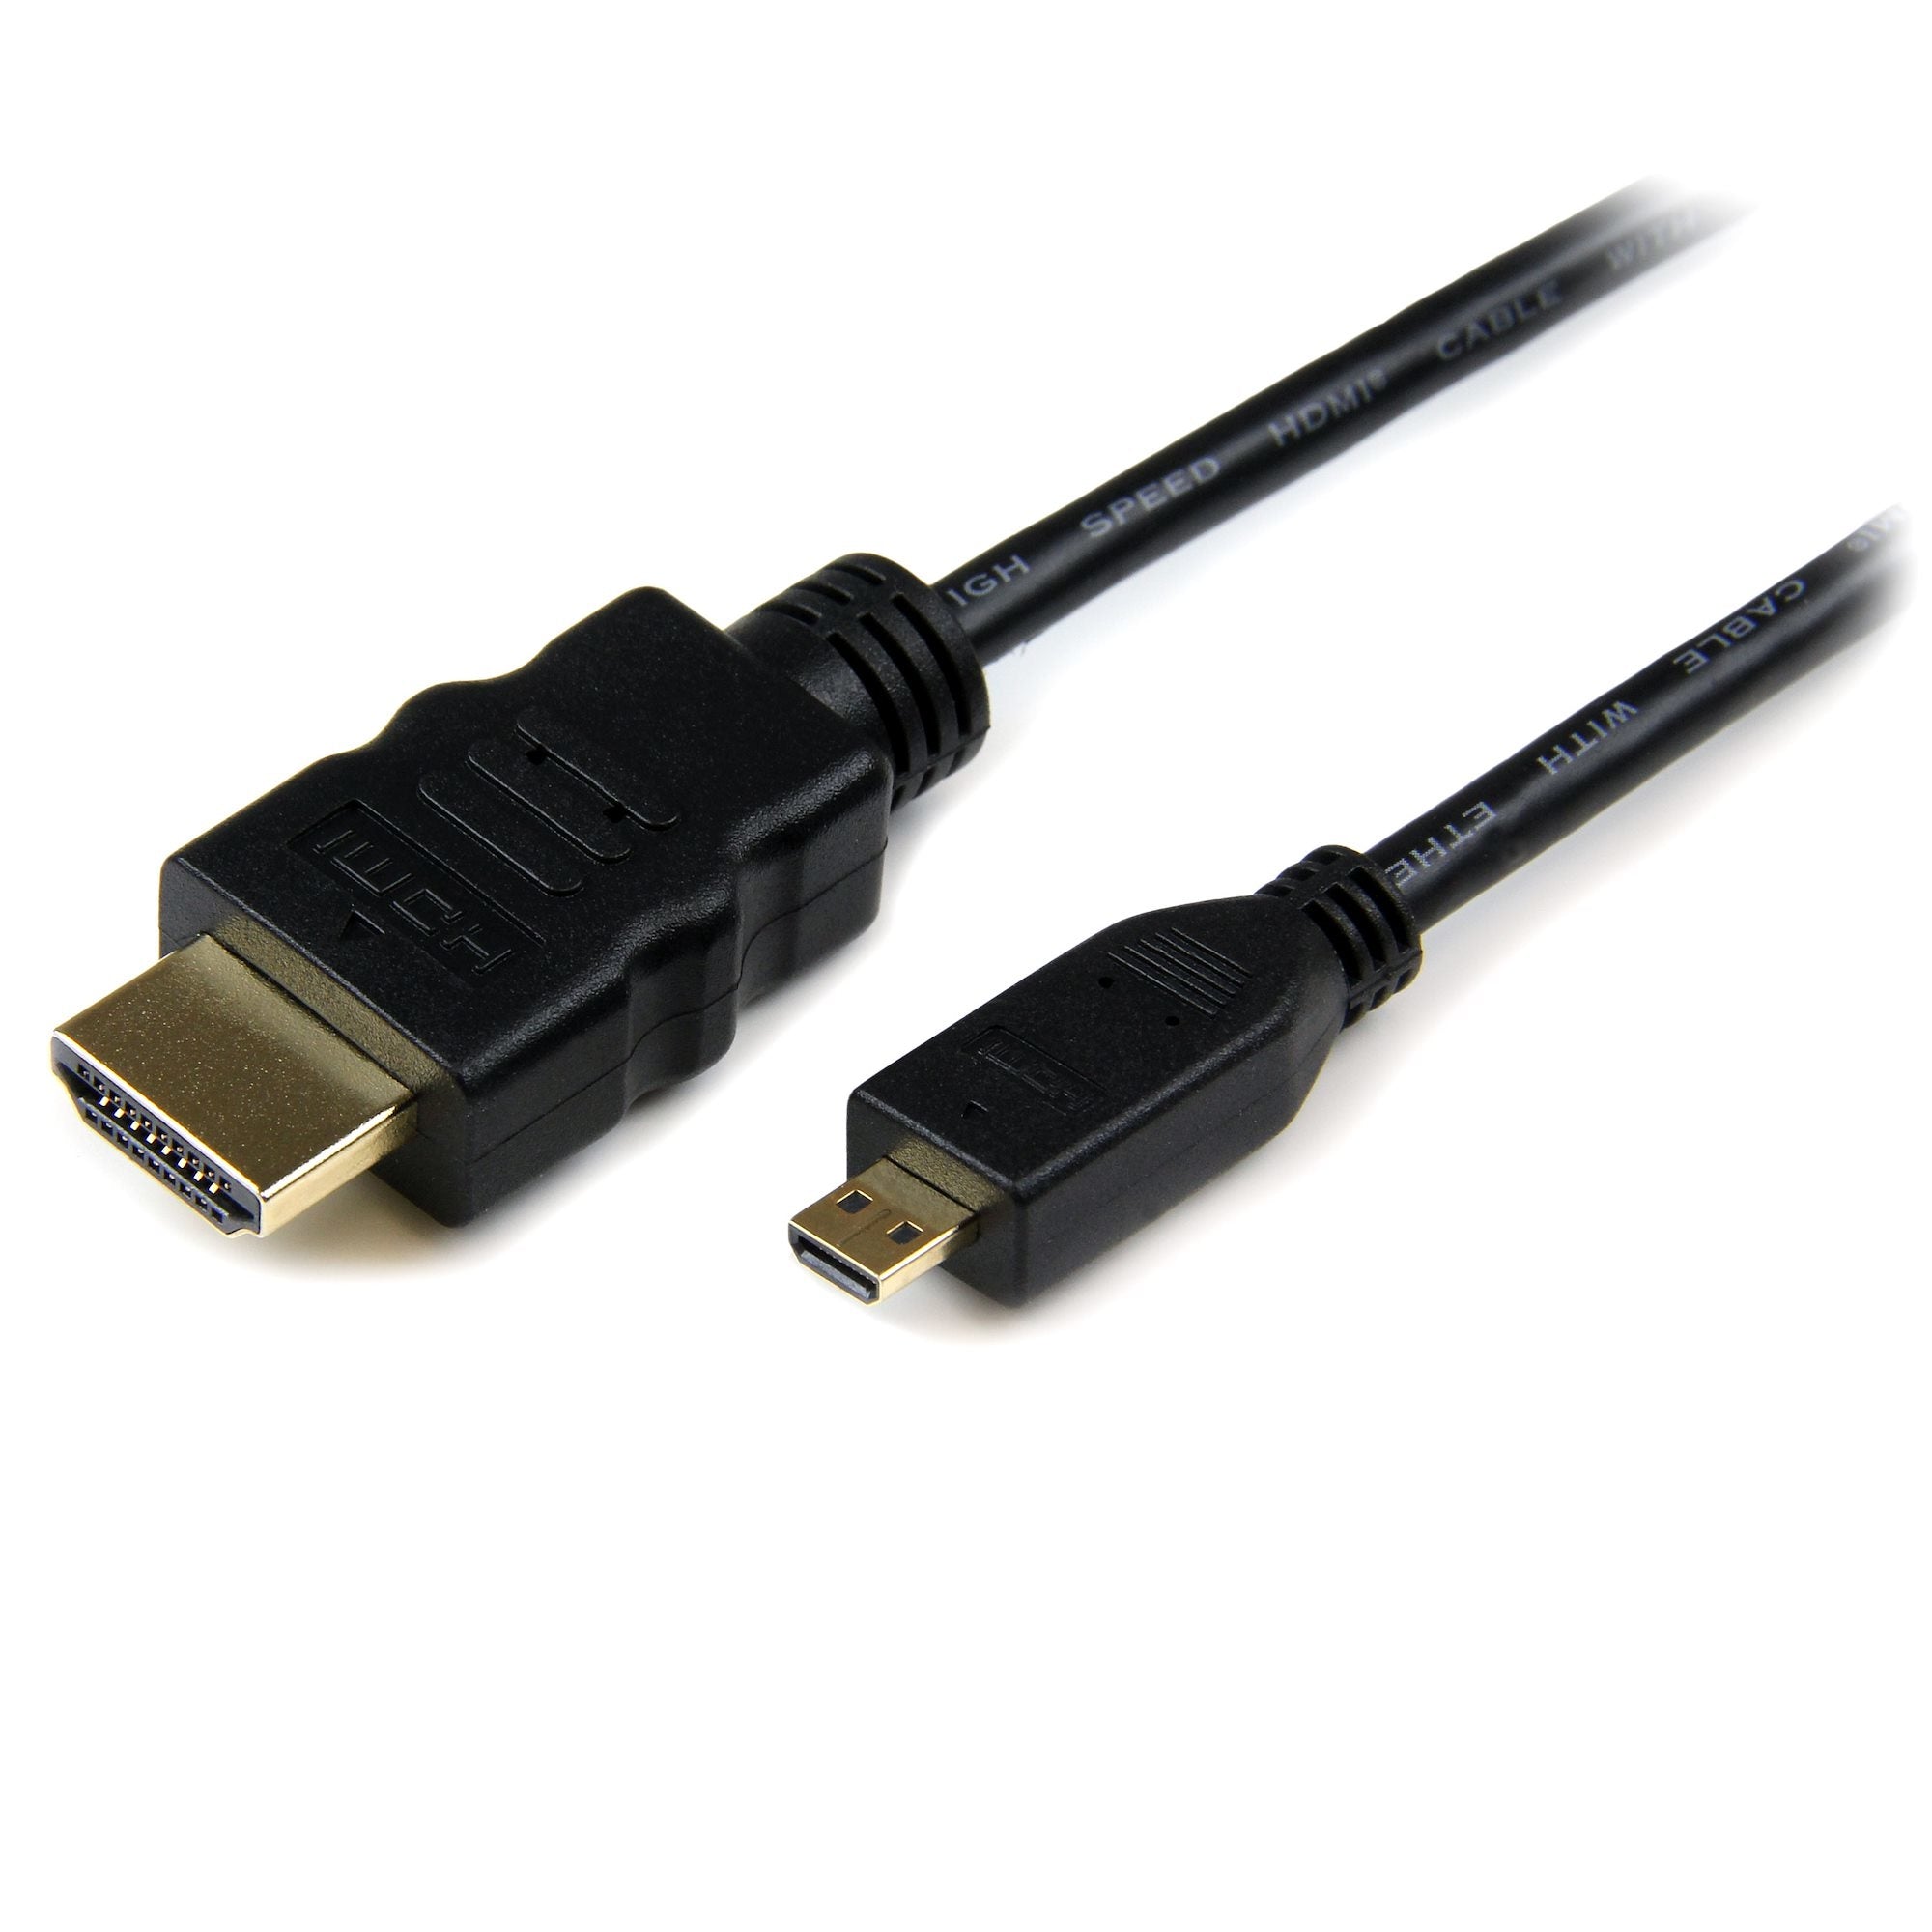 Cable Adaptador De 1.8M Hdmi A Micro Hdmi De Alta Velocidad Con Ethernet - Macho A Macho - Startech.Com Mod. Hdmiadmm6